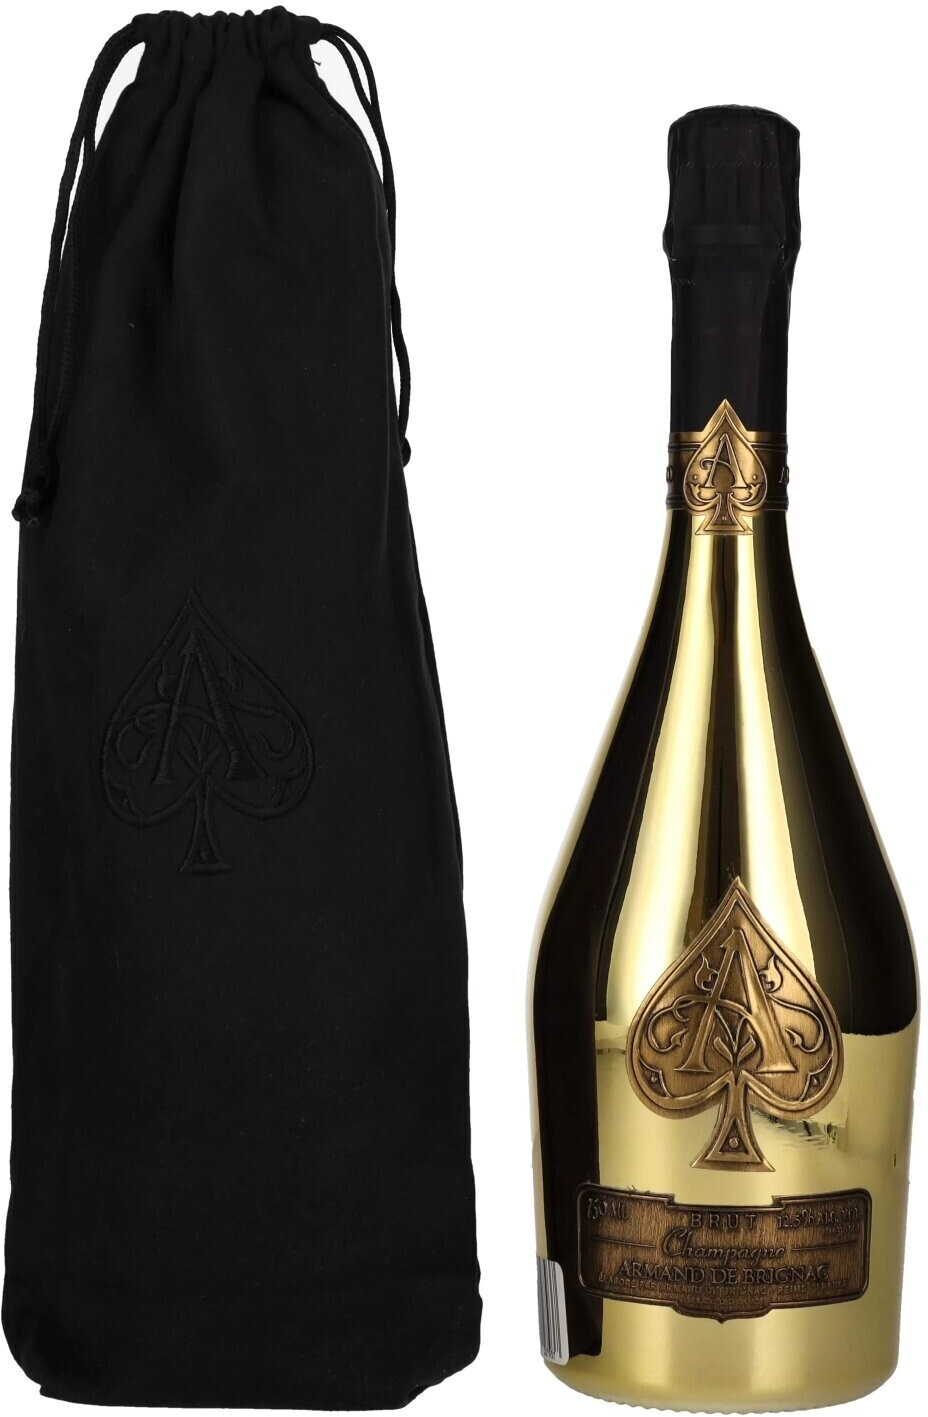 Velvet de 0,75l Brignac Armand 255,55 Brut ab Champagne € Gold Preisvergleich bei In Bag |